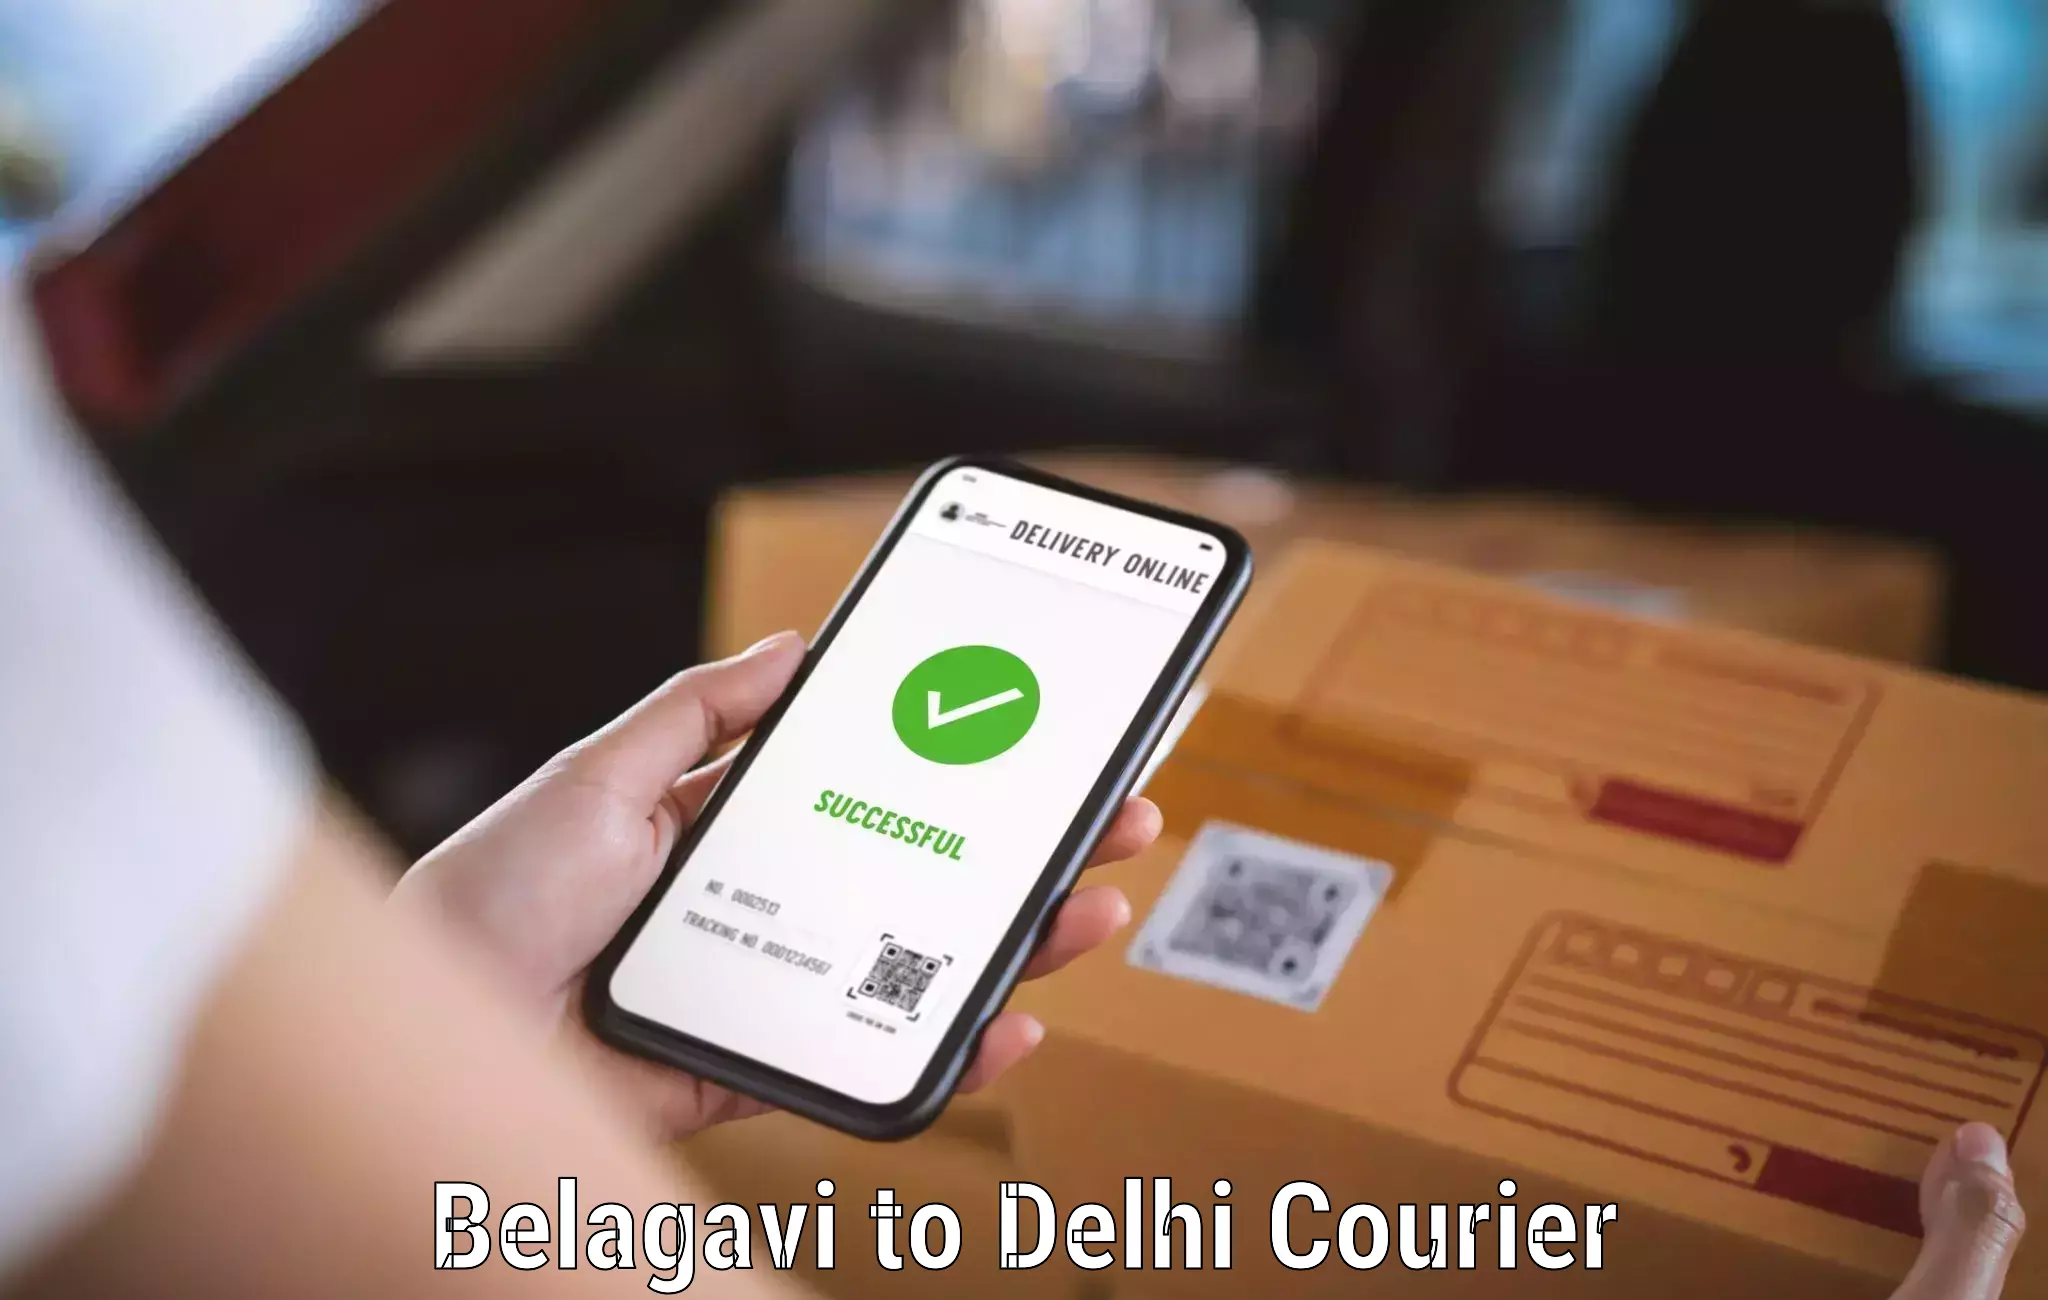 Global logistics network Belagavi to Delhi